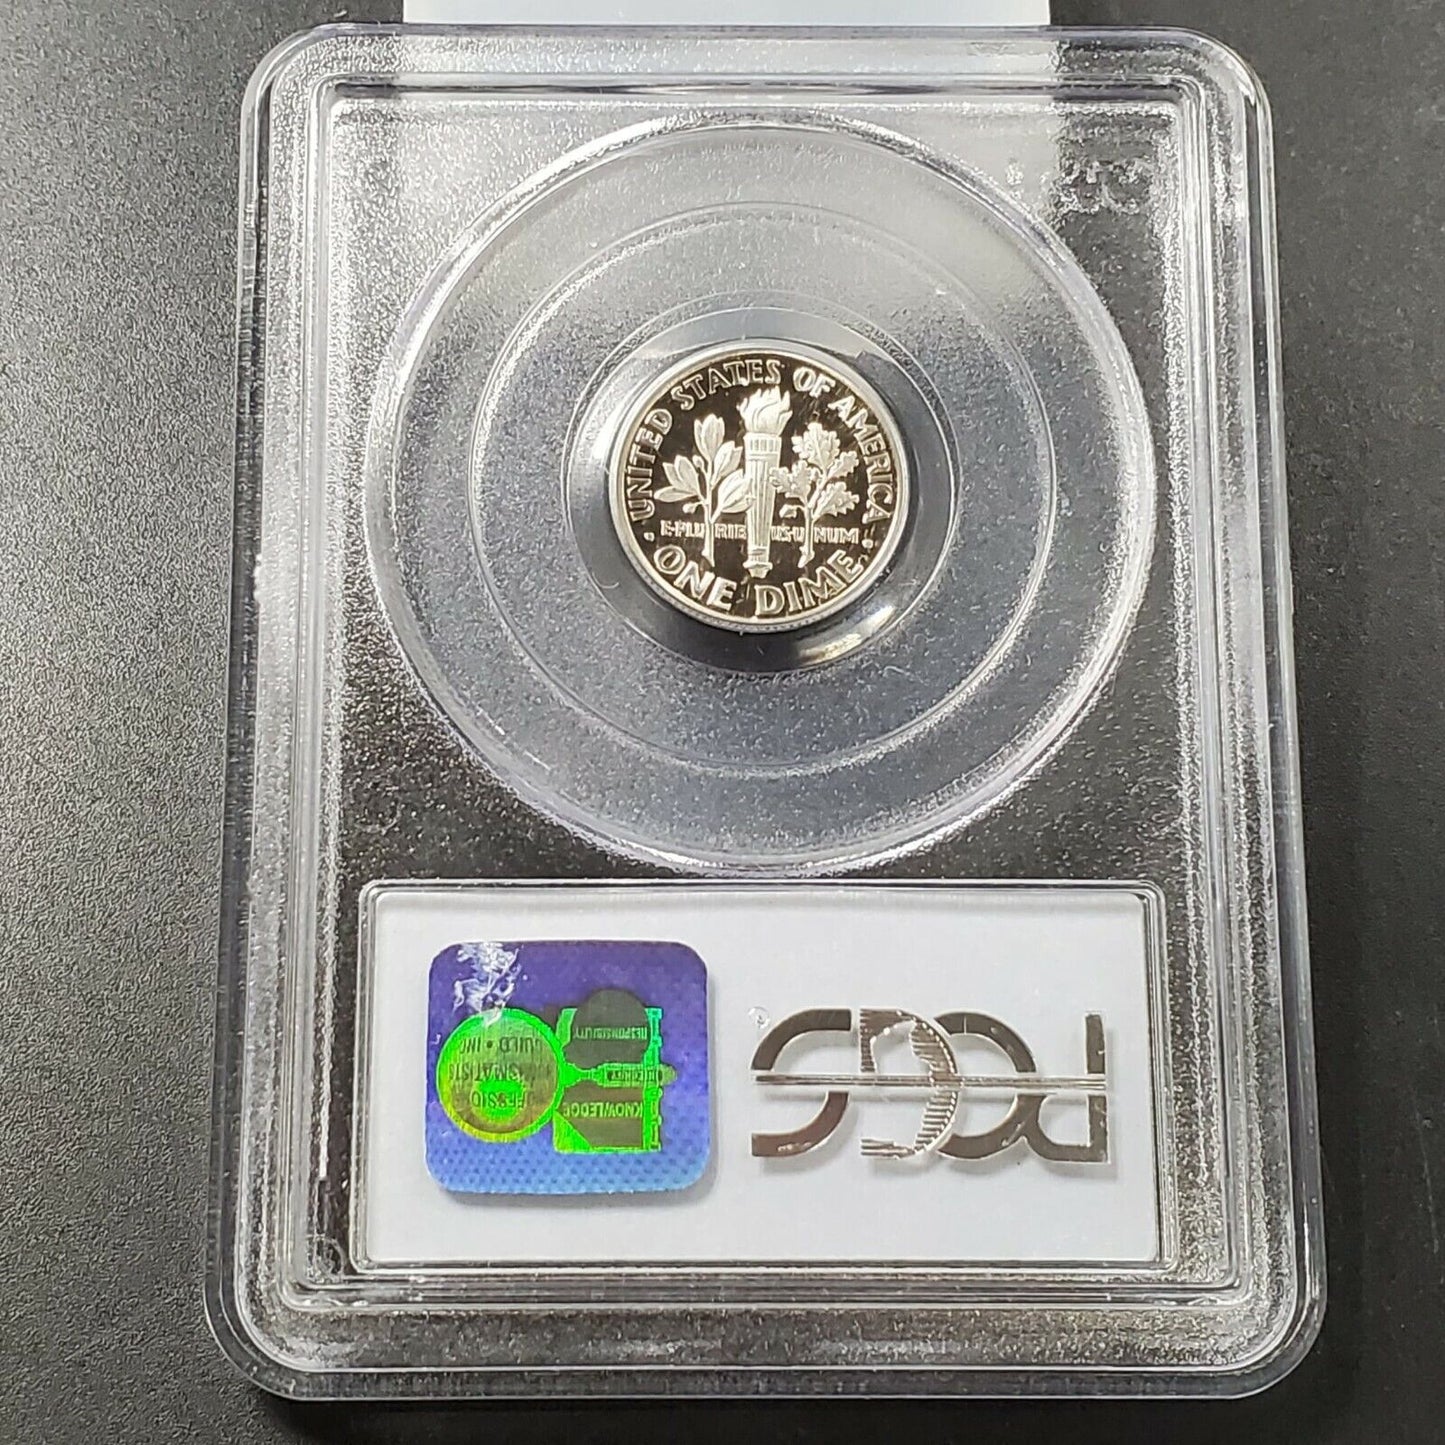 1994 S Roosevelt Clad Dime Coin PCGS PR69 DCAM Proof Deep Cameo #5